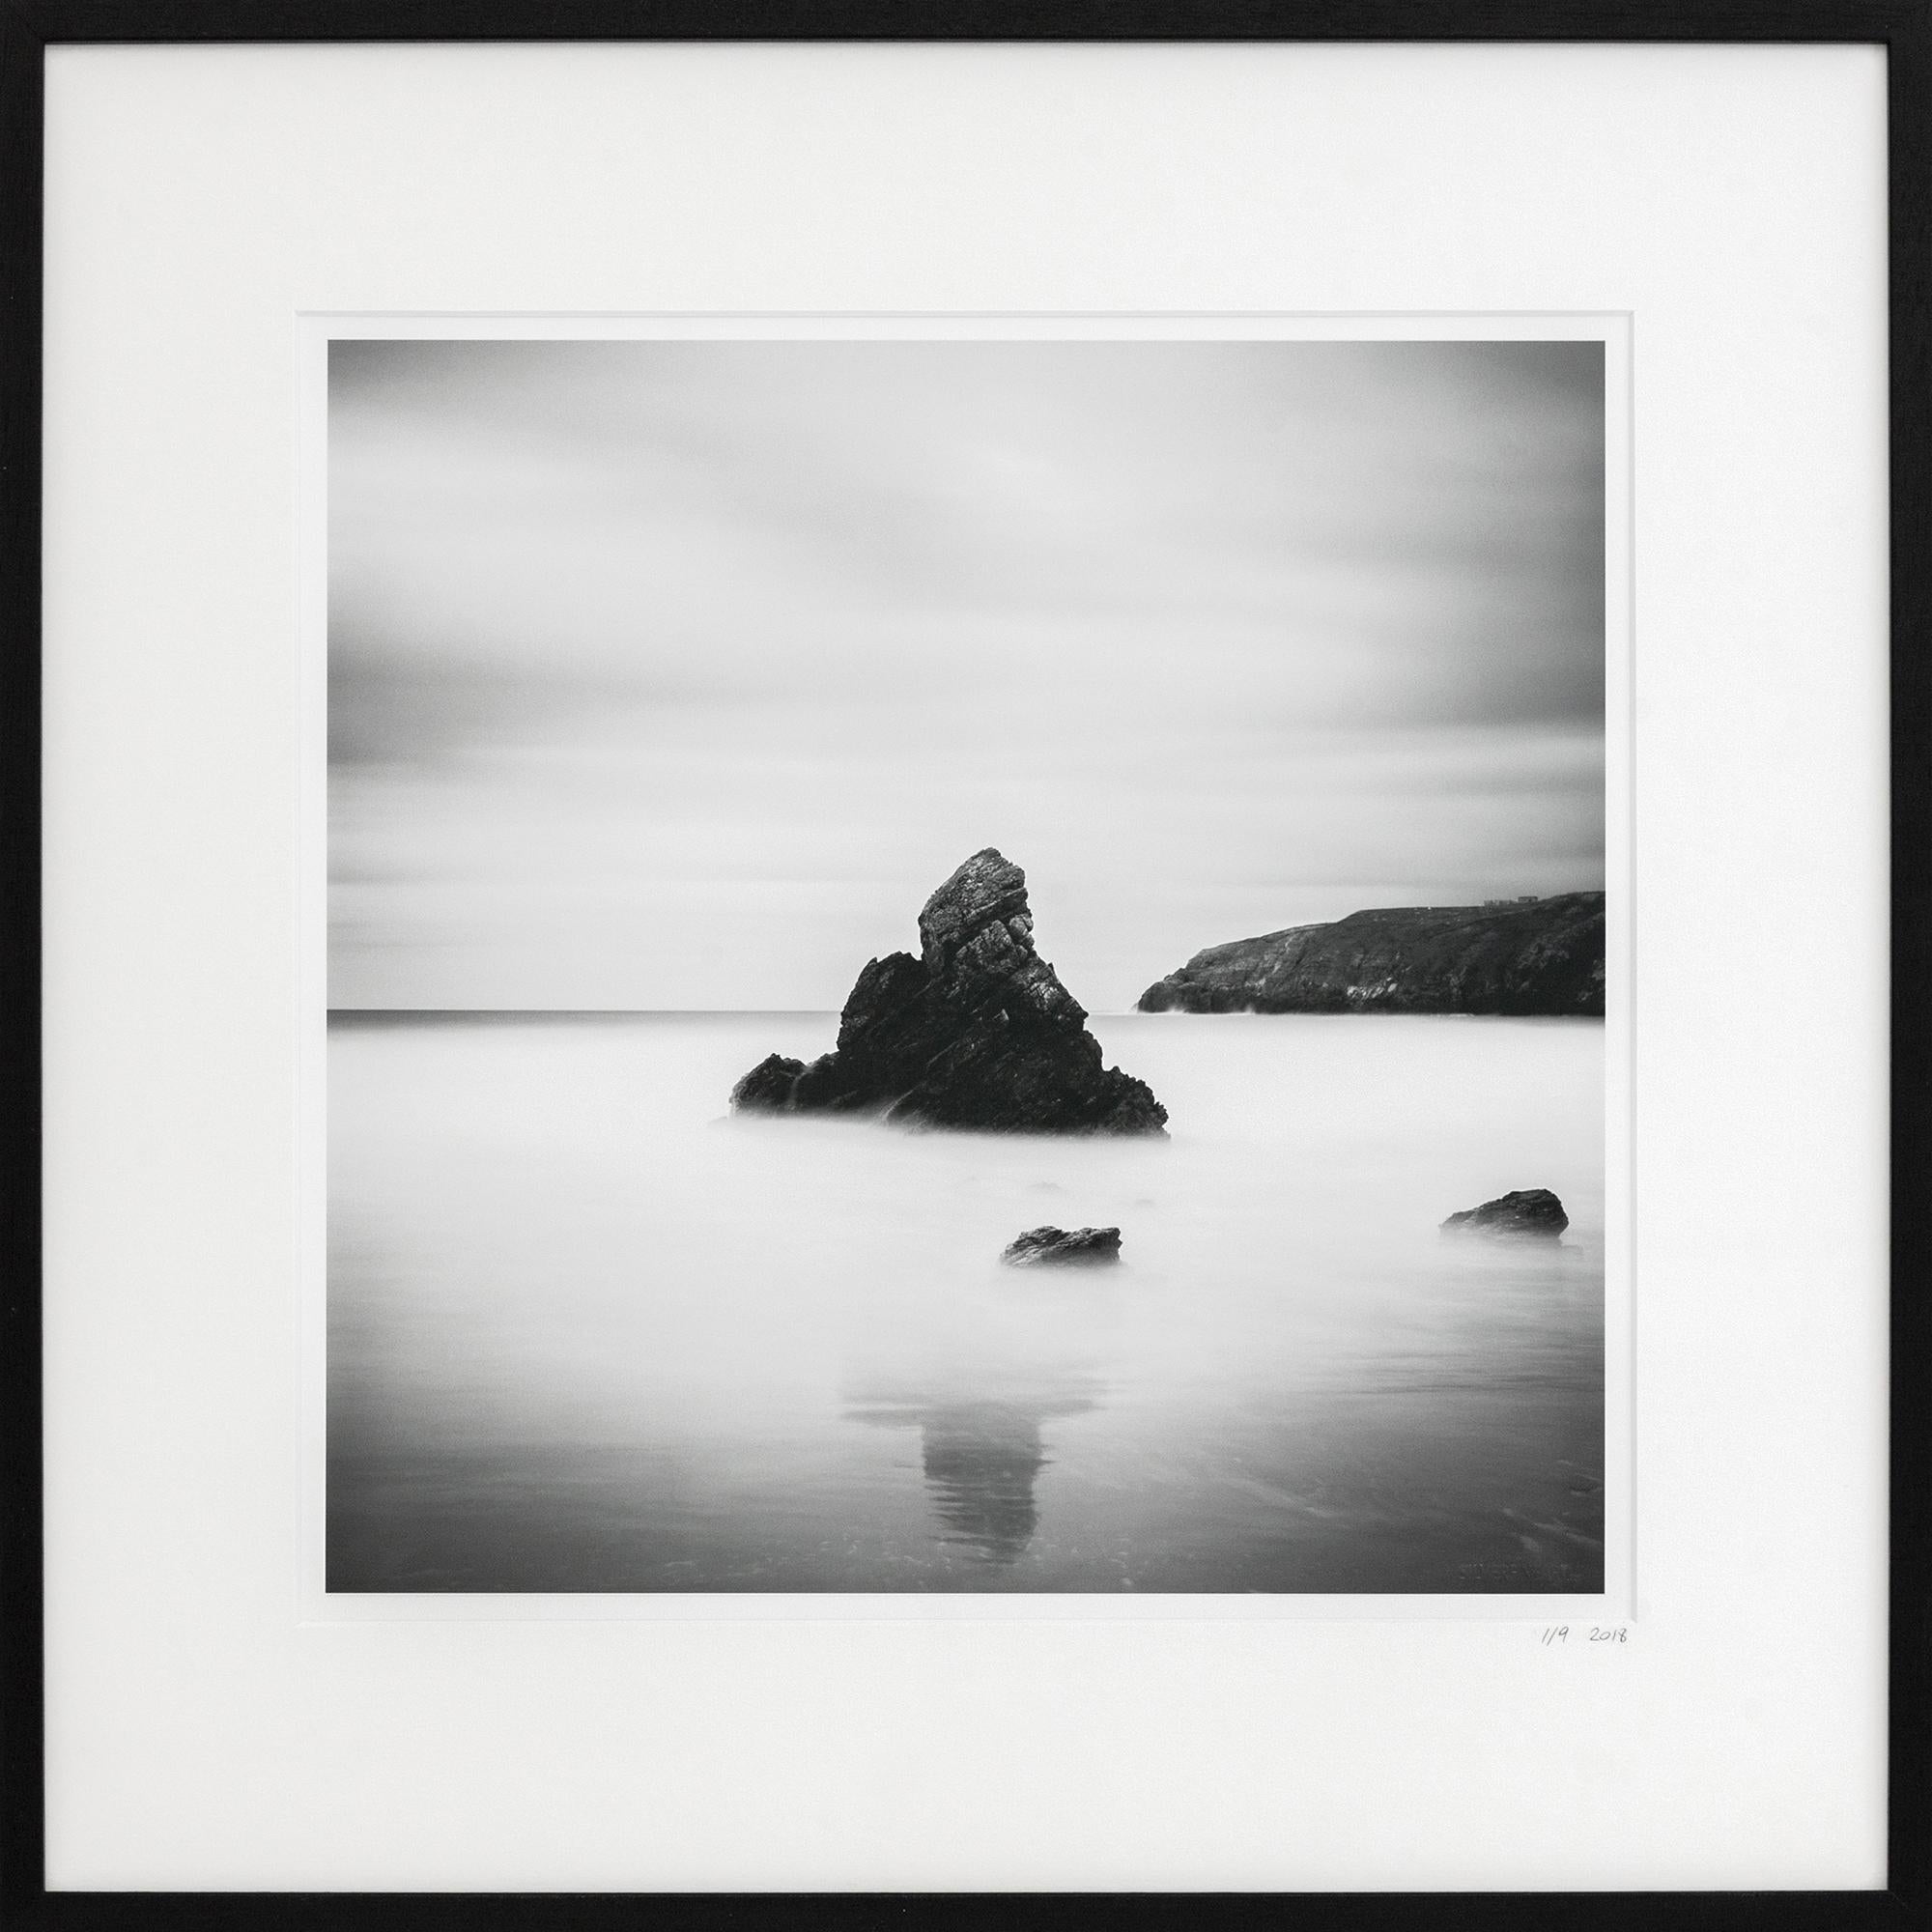 Gerald Berghammer Landscape Photograph - Sea Stack, Scottish rocky coast, black and white analog photography, wood frame